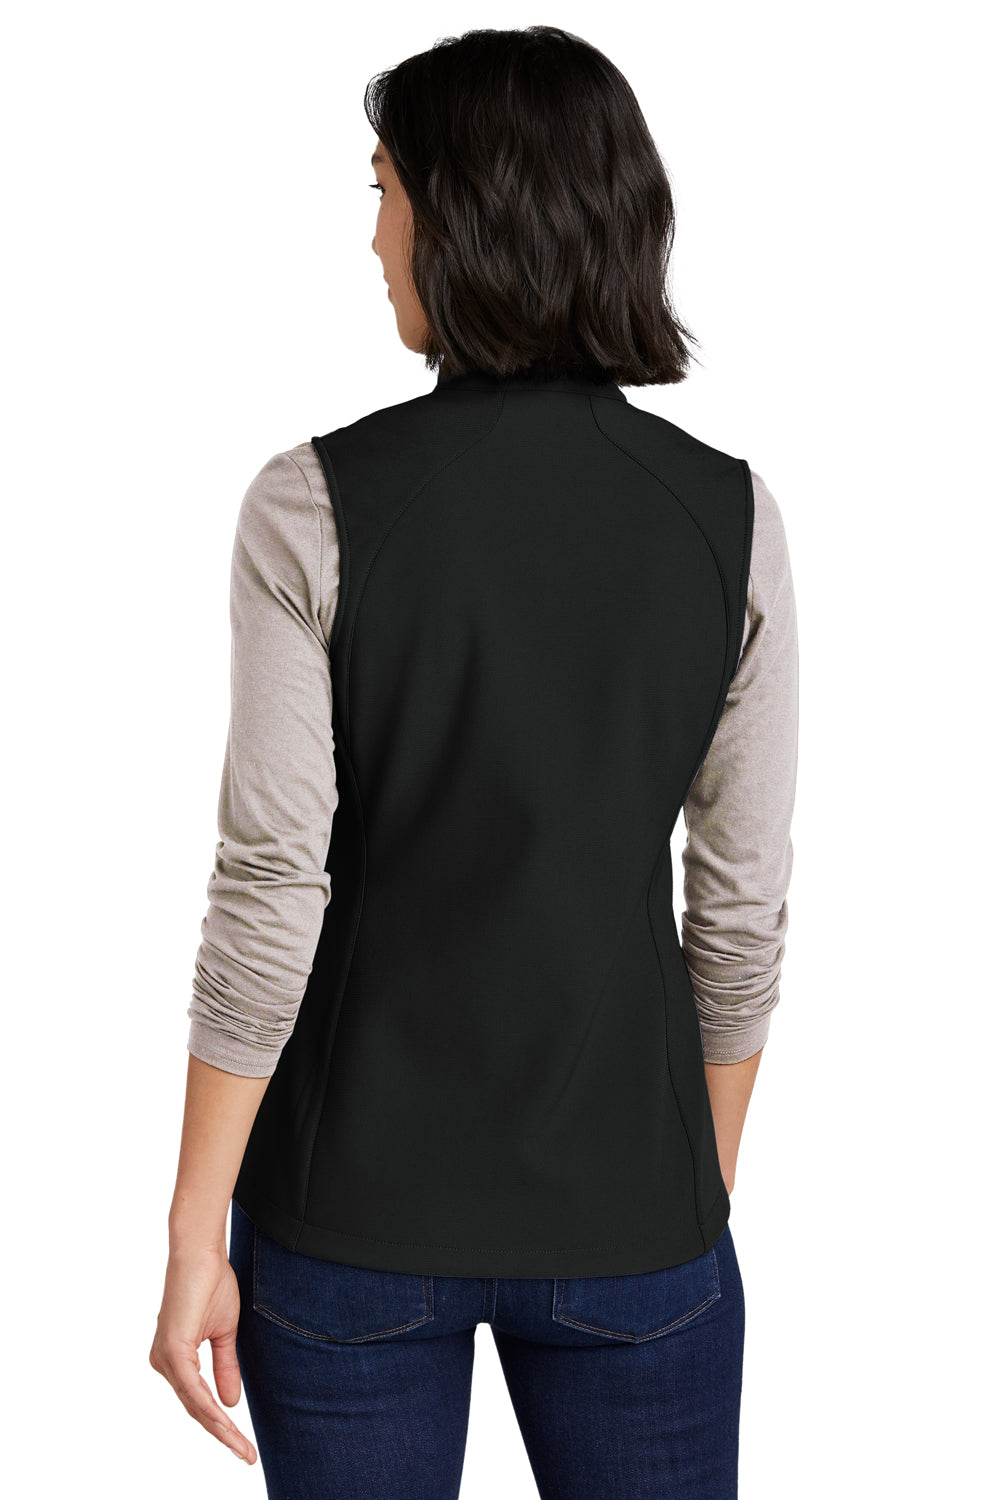 Eddie Bauer EB547 Womens Stretch Soft Shell Full Zip Vest Deep Black Model Back